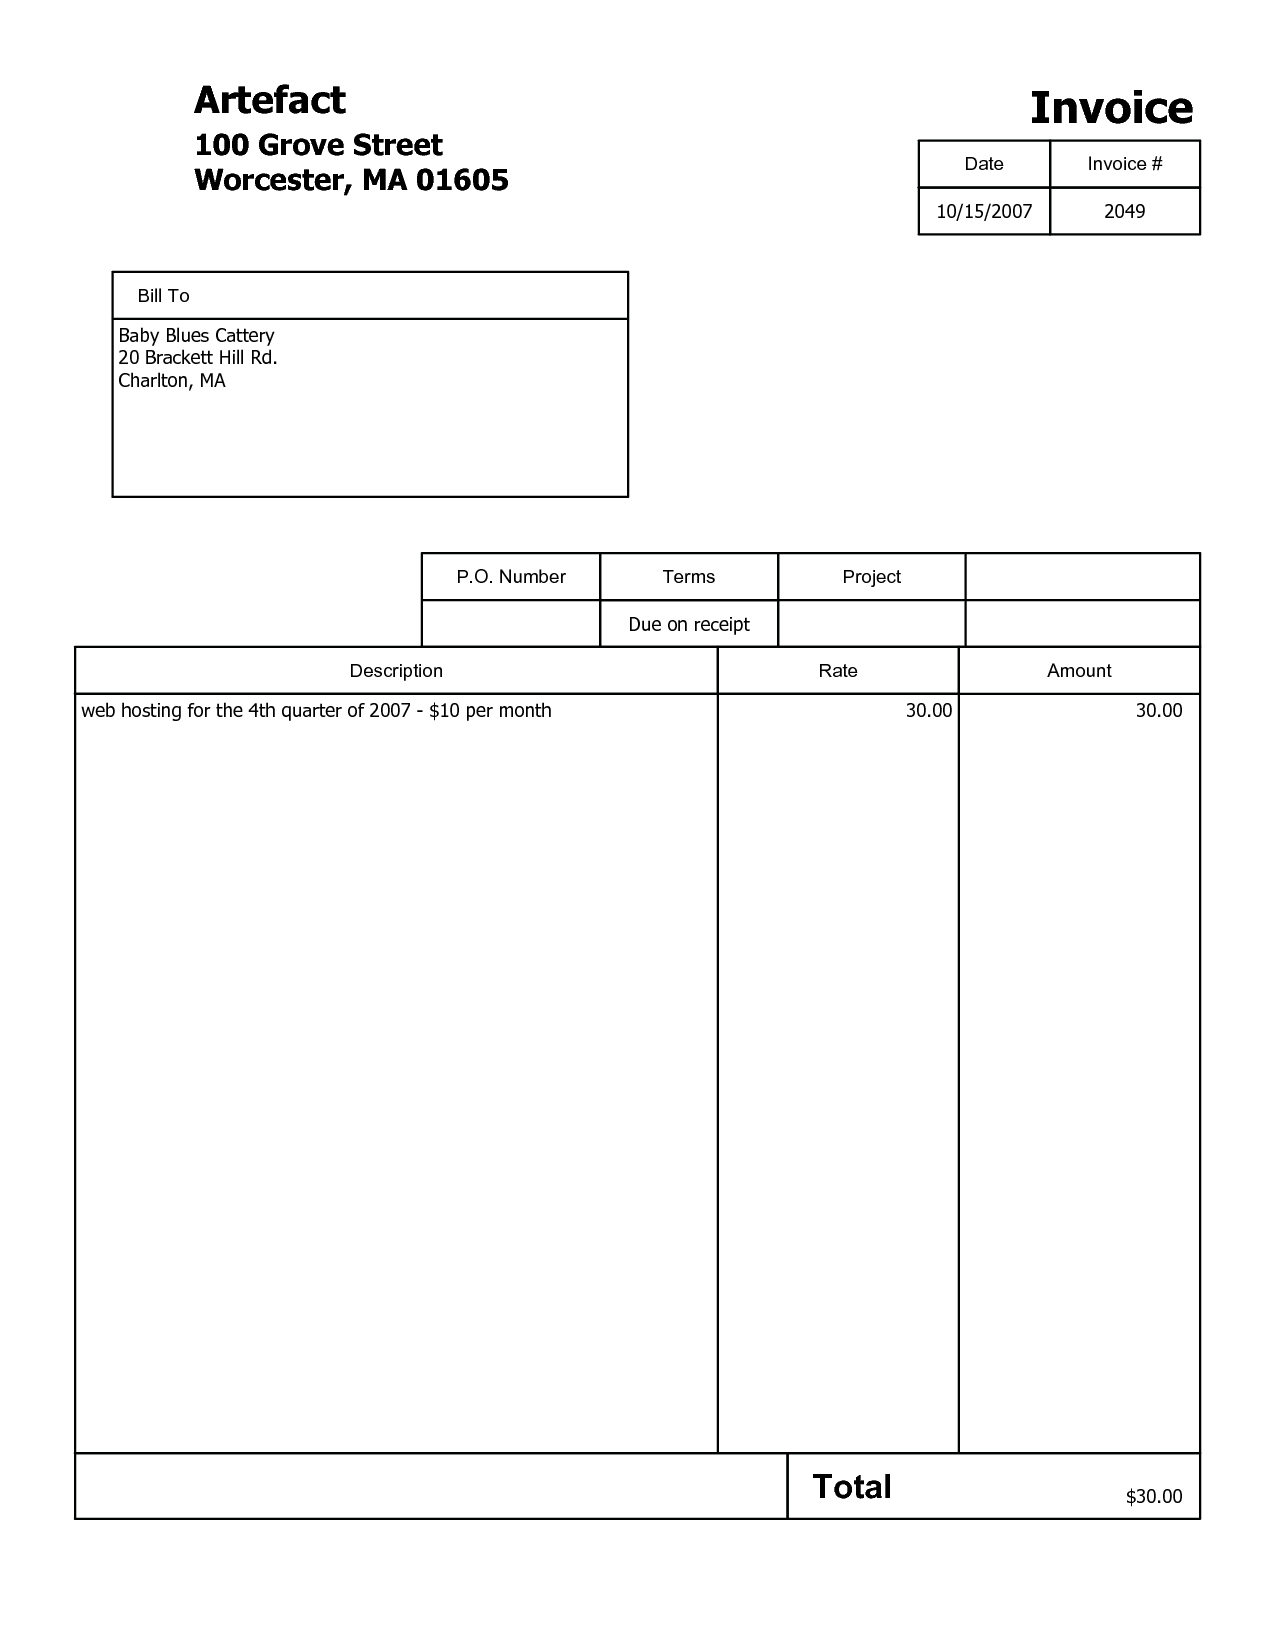 invoice sample pdf invoice template free 2016 invoice format in pdf